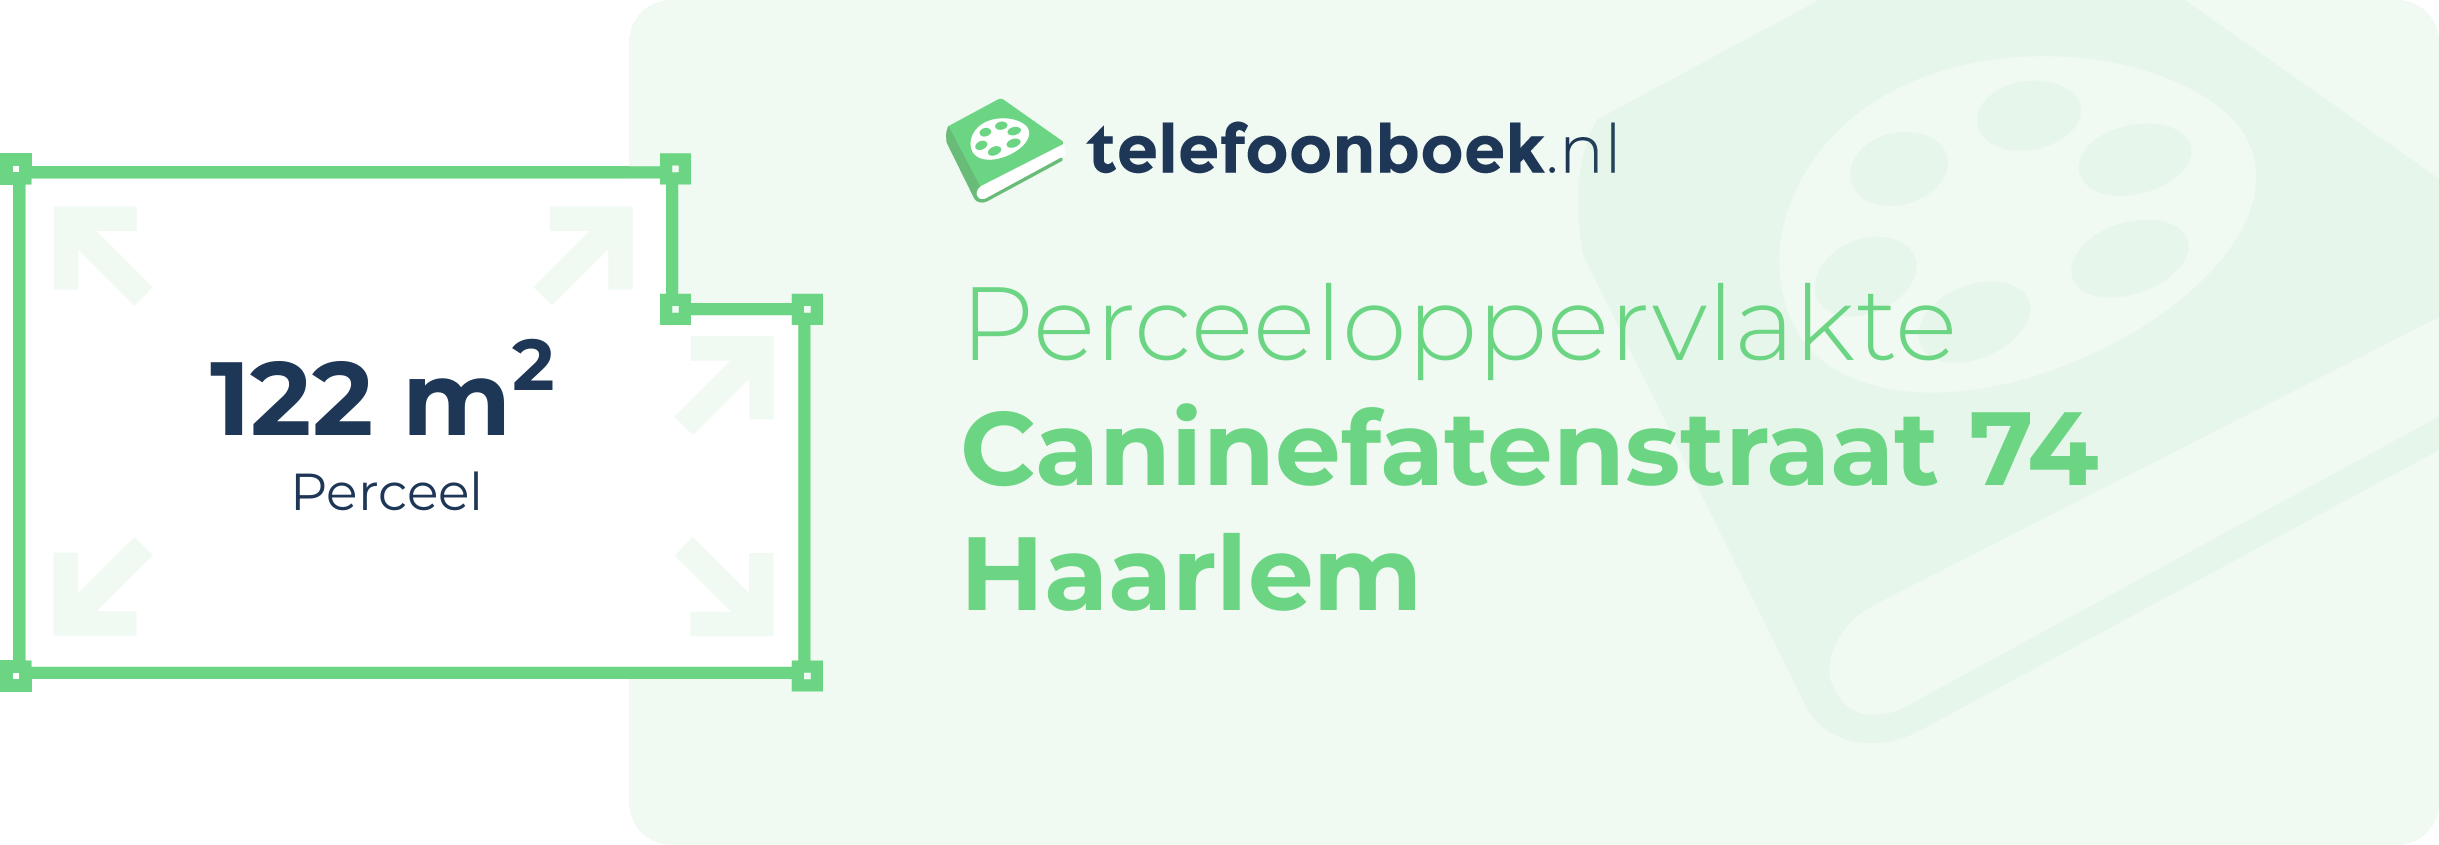 Perceeloppervlakte Caninefatenstraat 74 Haarlem